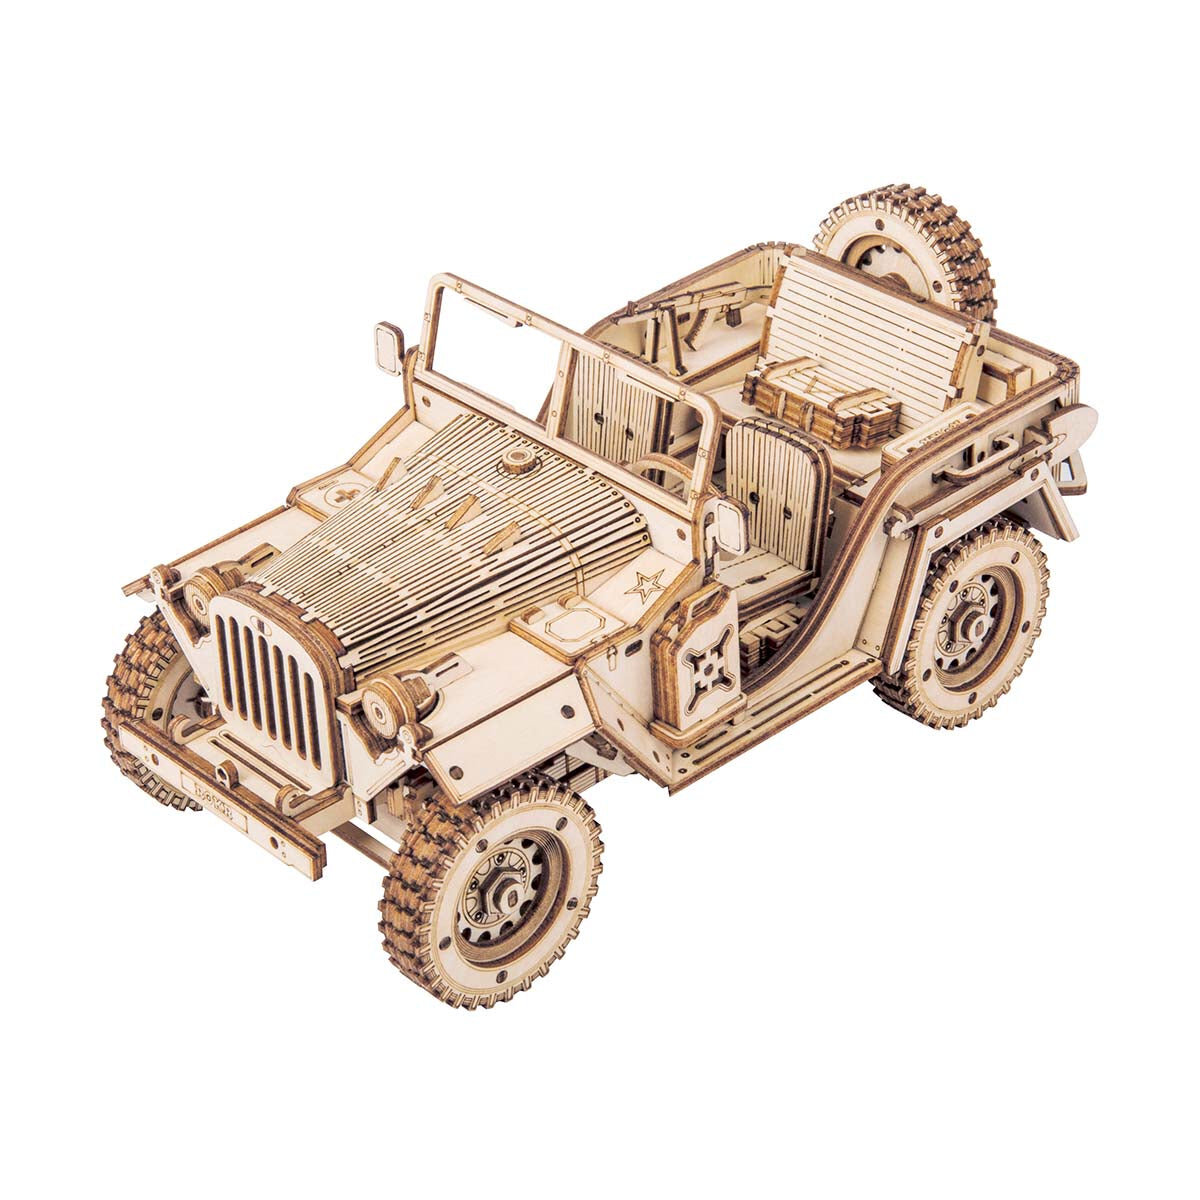 3D-Puzzle aus Holz - Armeejeep Modell ROKR MC701